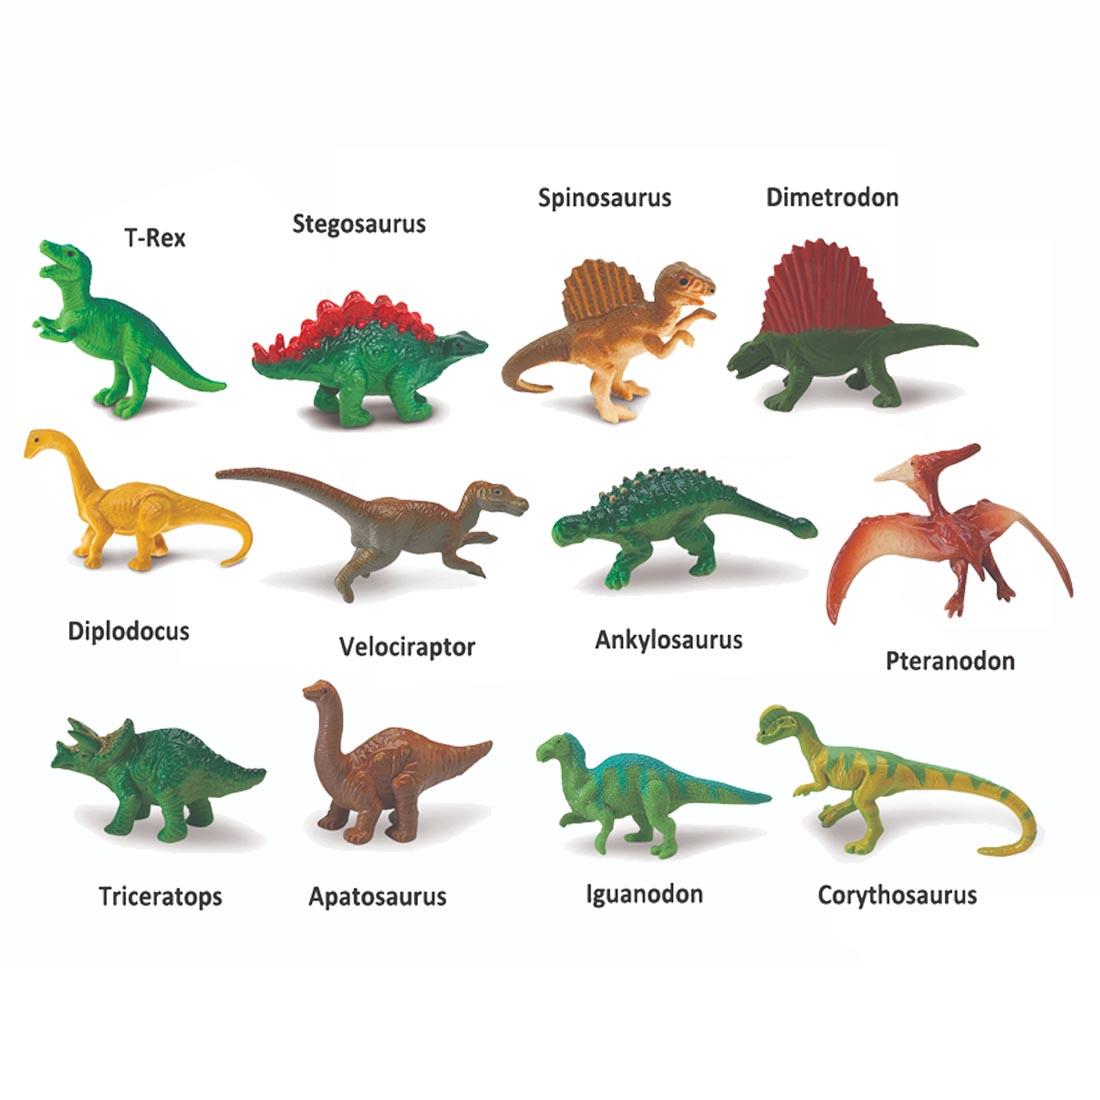 12 Dino Figurines labeled with their names: t-rex, stegosaurus, spinosaurus, dimetrodon, diplodocus, velociraptor, ankylosaurus, pteranodon, triceratops, apatosaurus, iguanodon, corythosaurus